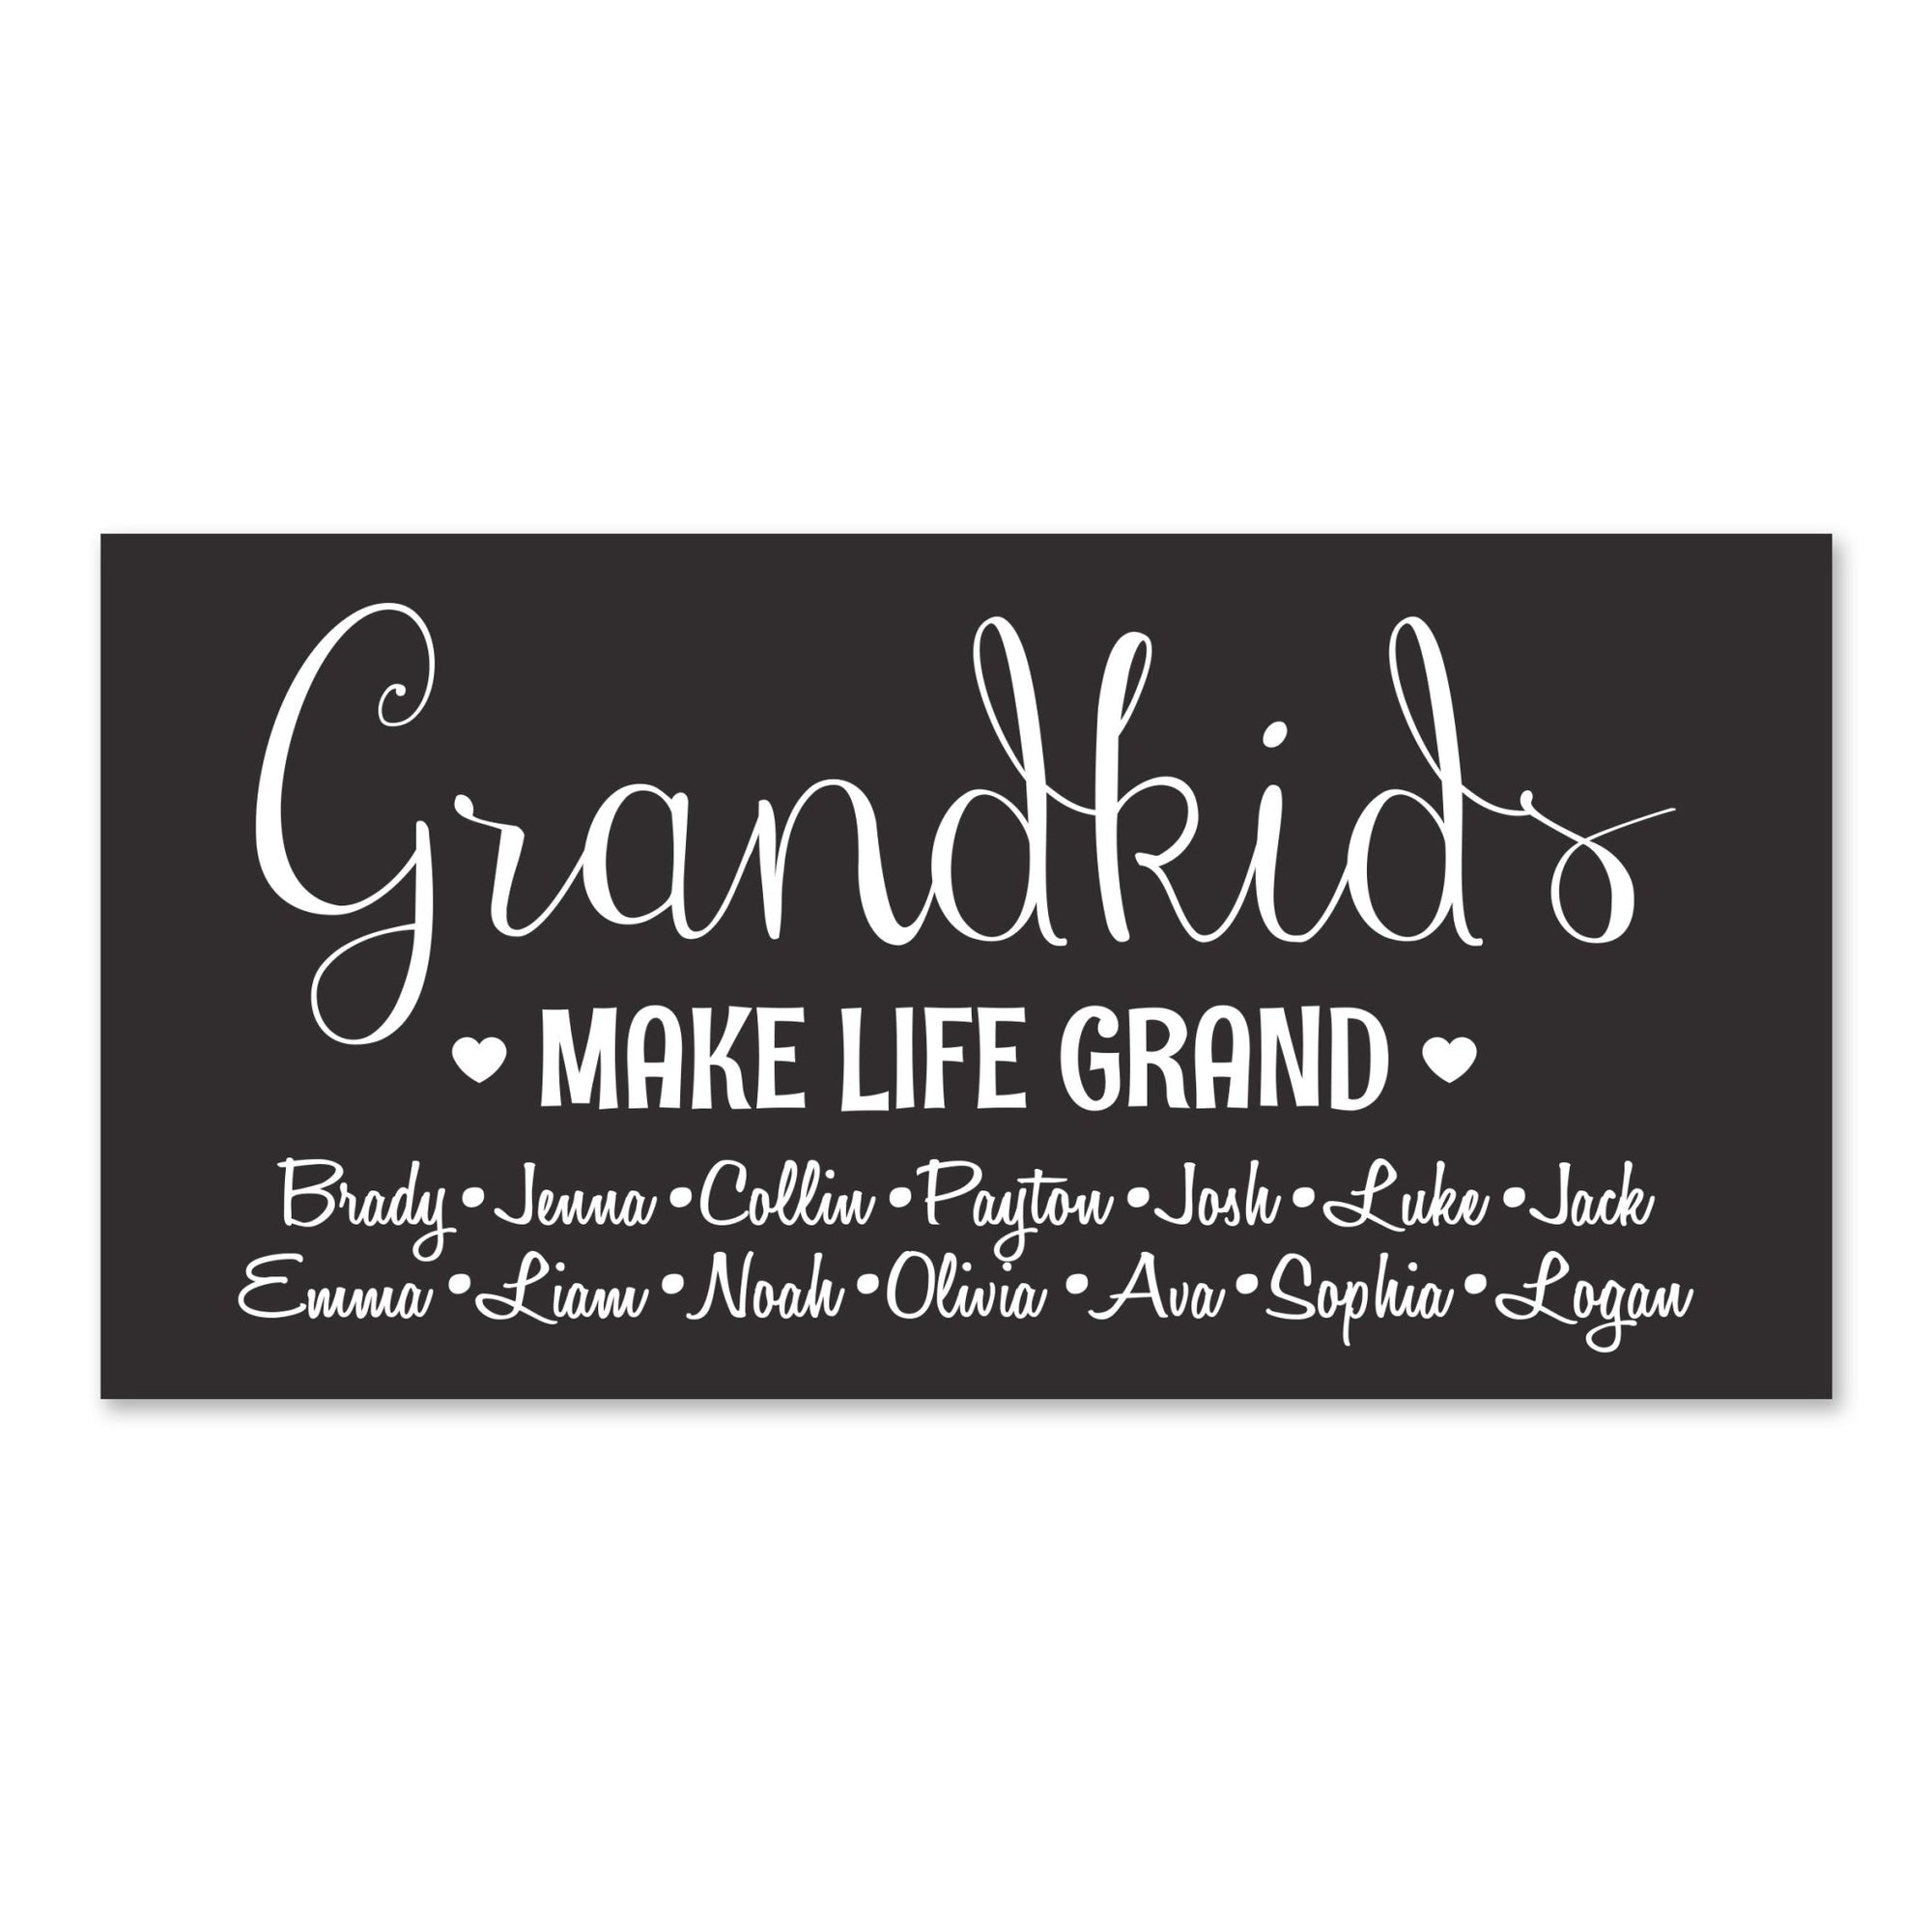 Personalized Grandparents Wall Plaque Make Life Grand - Design 2 - LifeSong Milestones